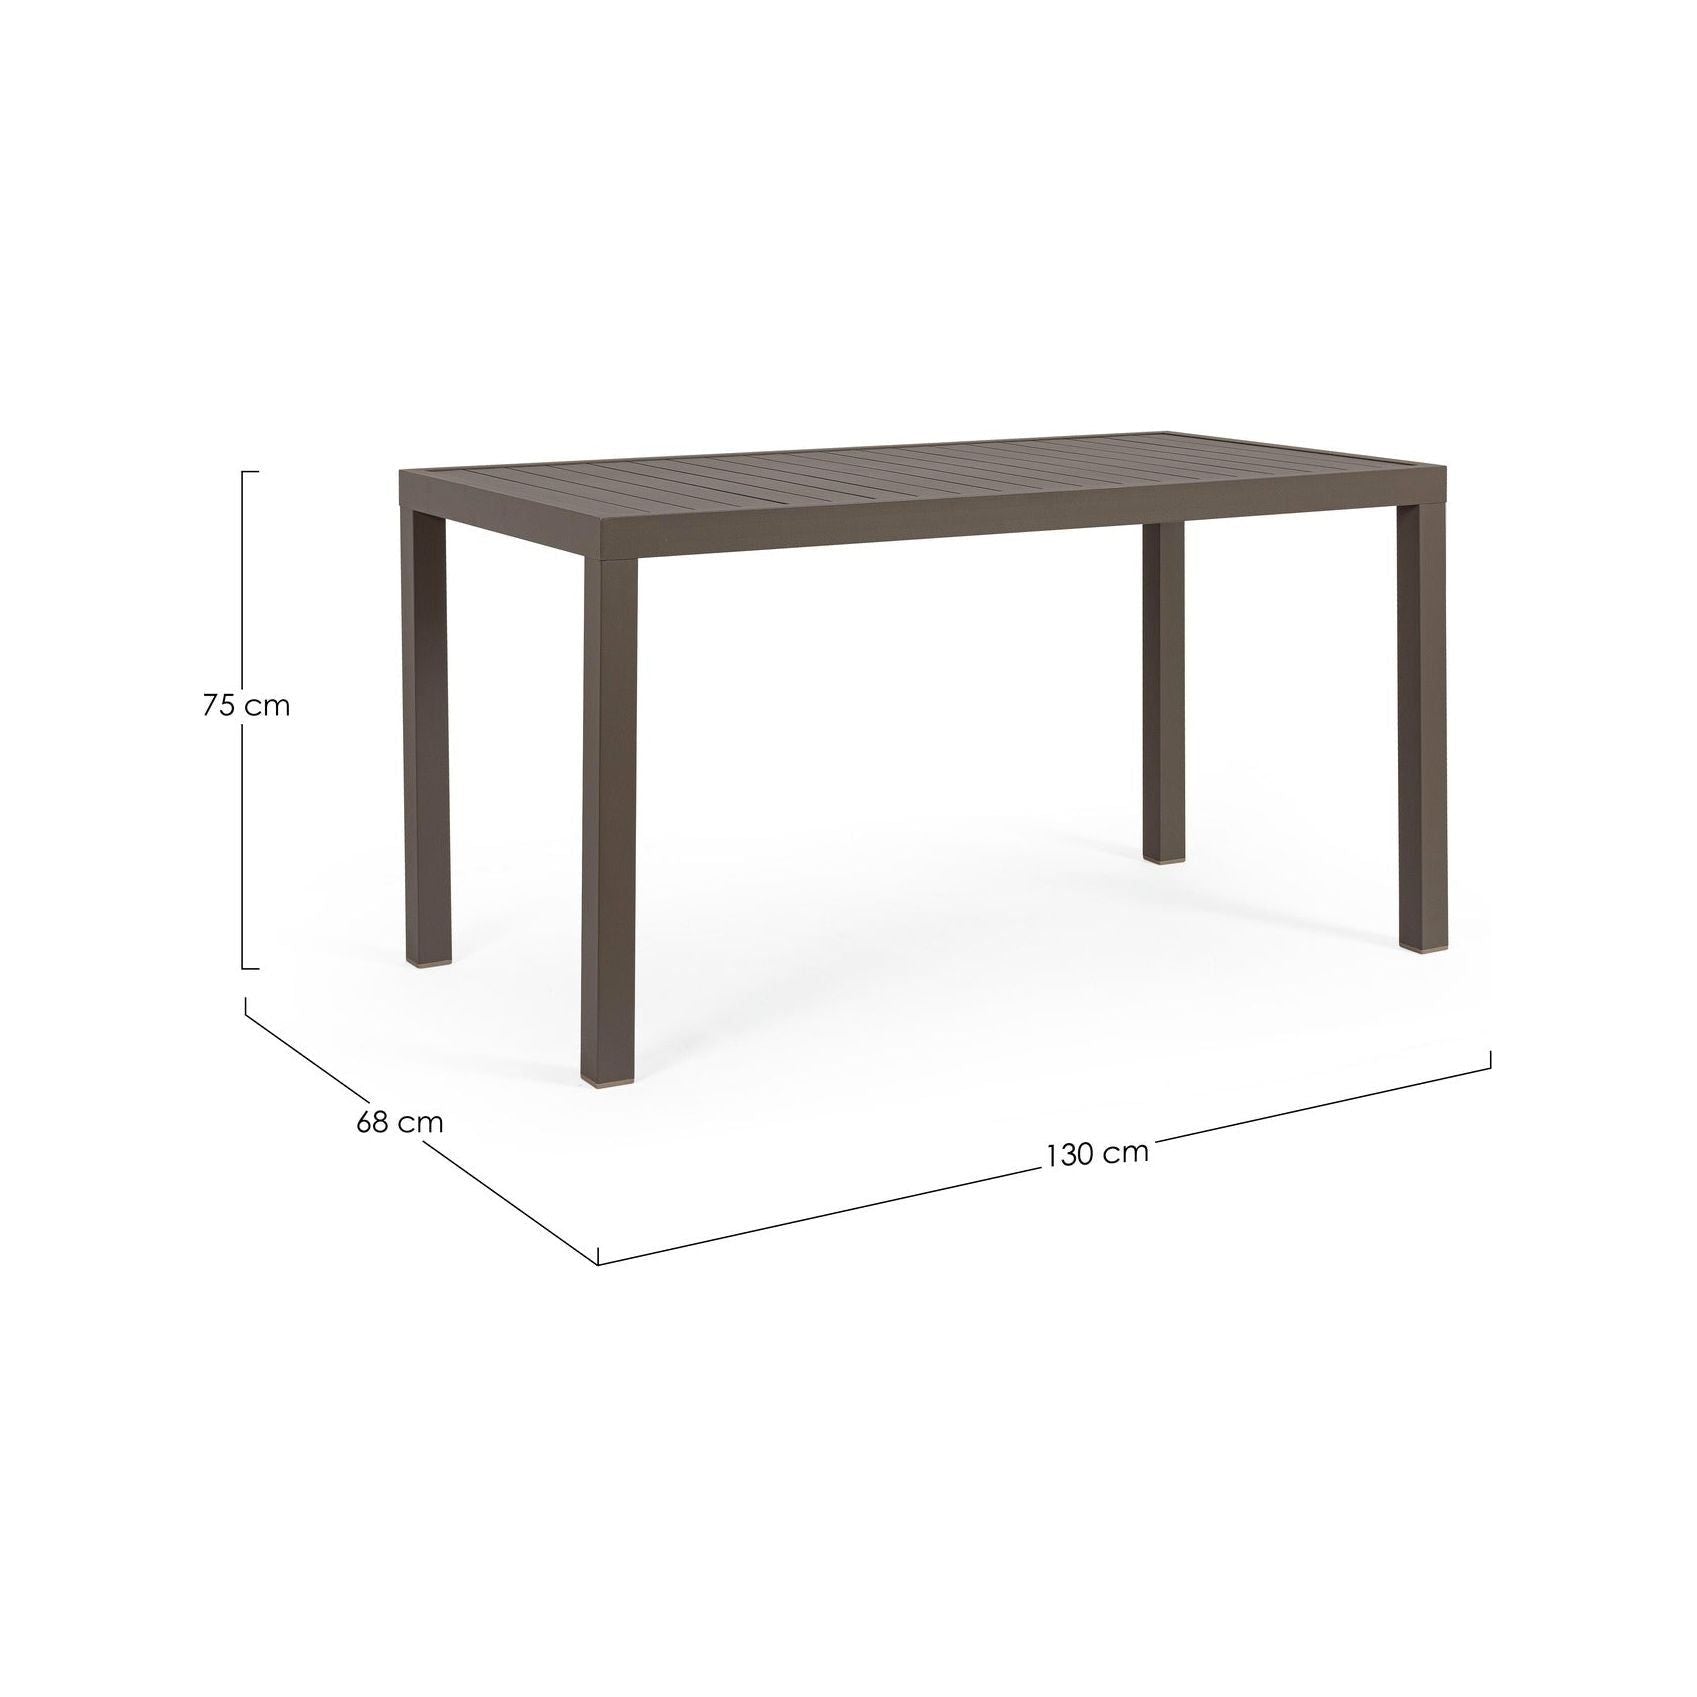 Lauko valgomojo stalas HILDE, 130X68 cm